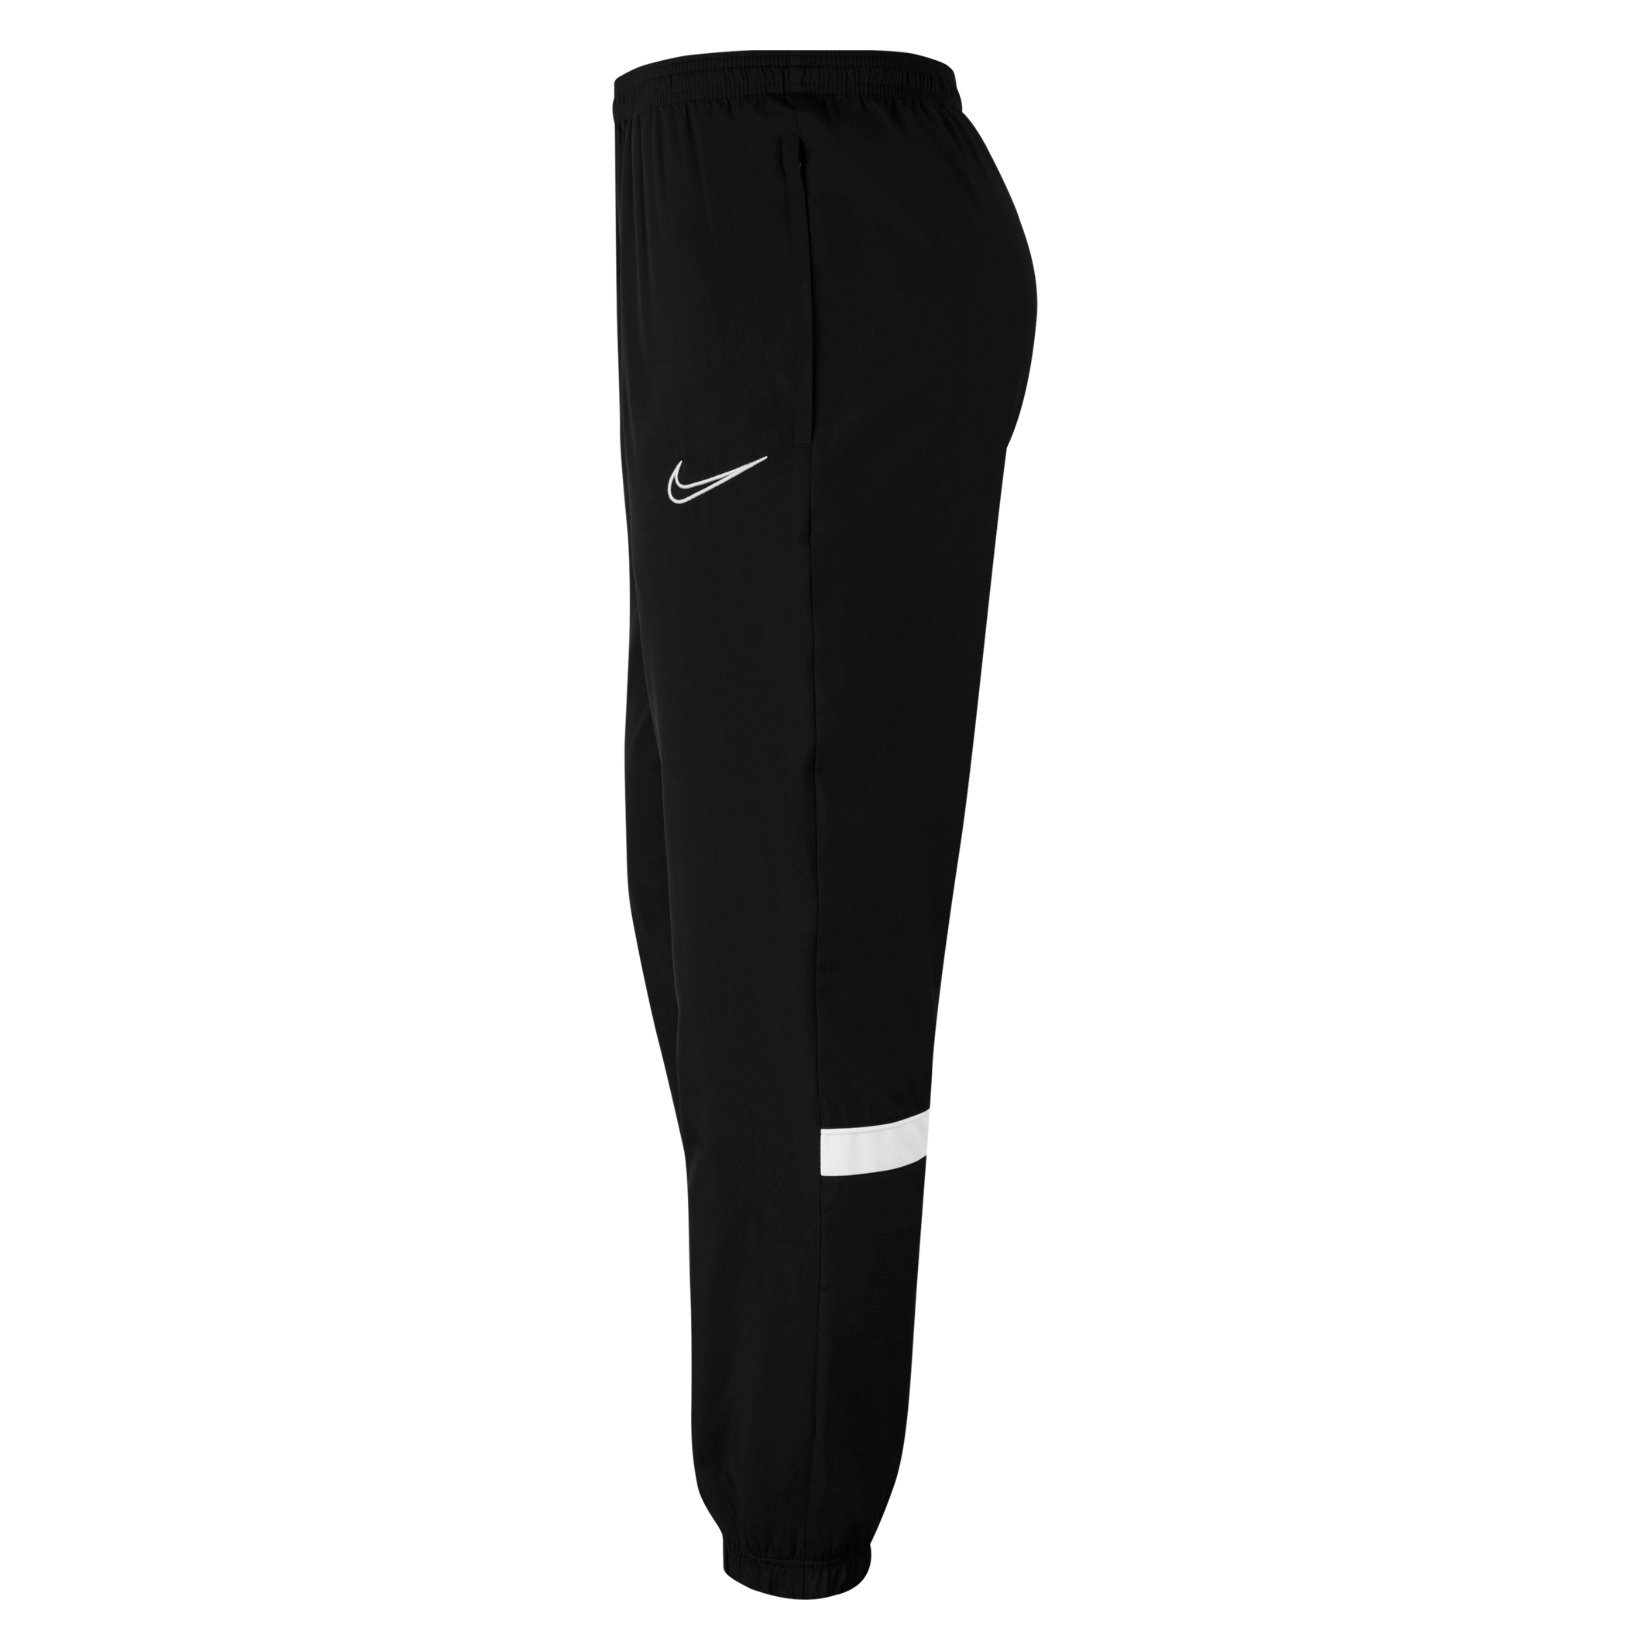 Men's Nike Air Swoosh Woven Track Pants| JD Sports